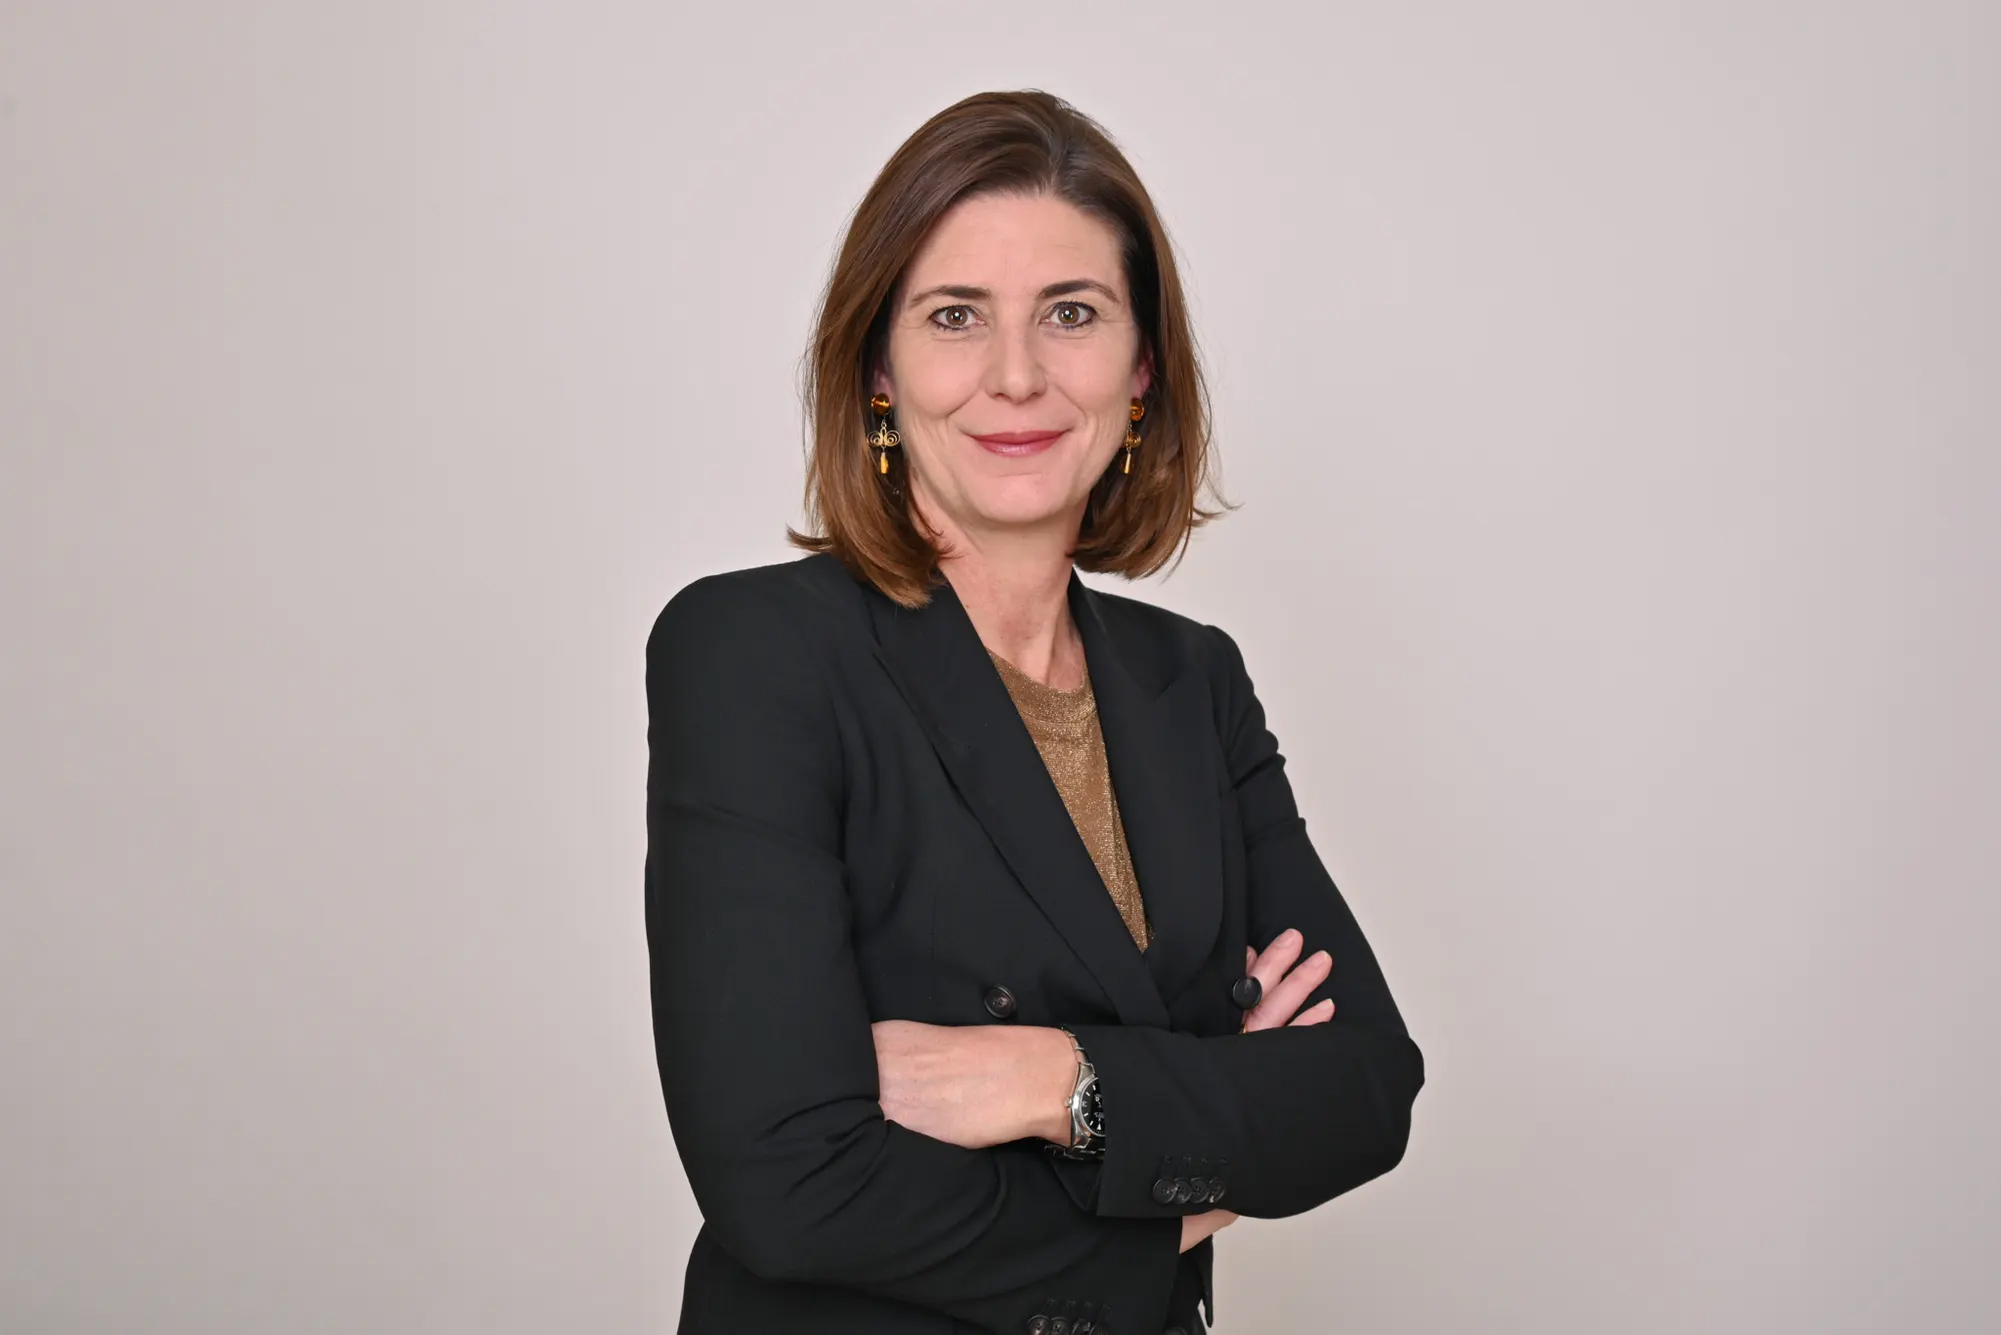 Gretta Fenner, the director of the Basel Institute on Governance.